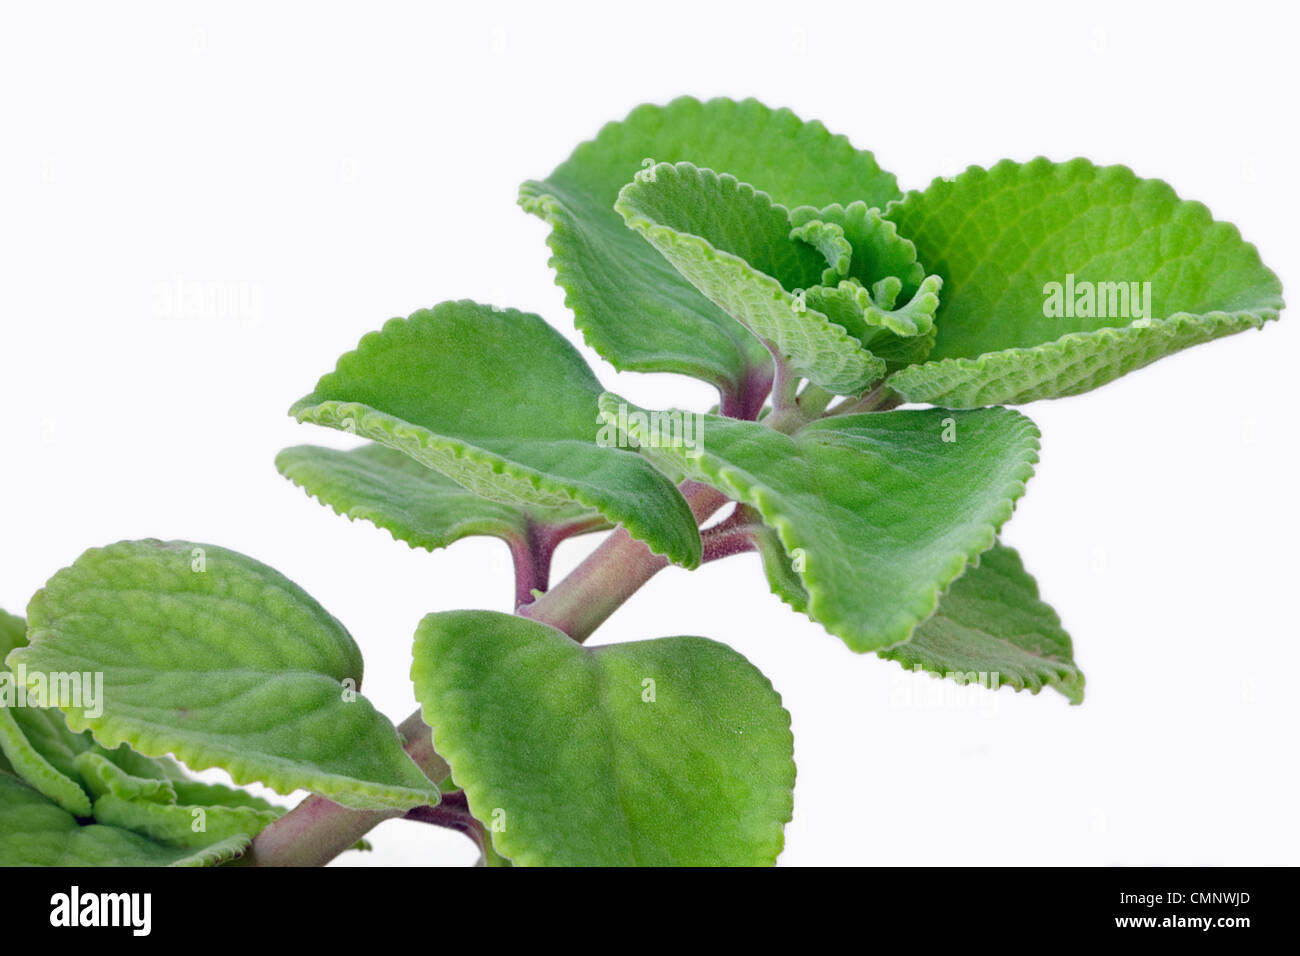 Closeup view of Indian Borage plant stem on white background Stock Photo